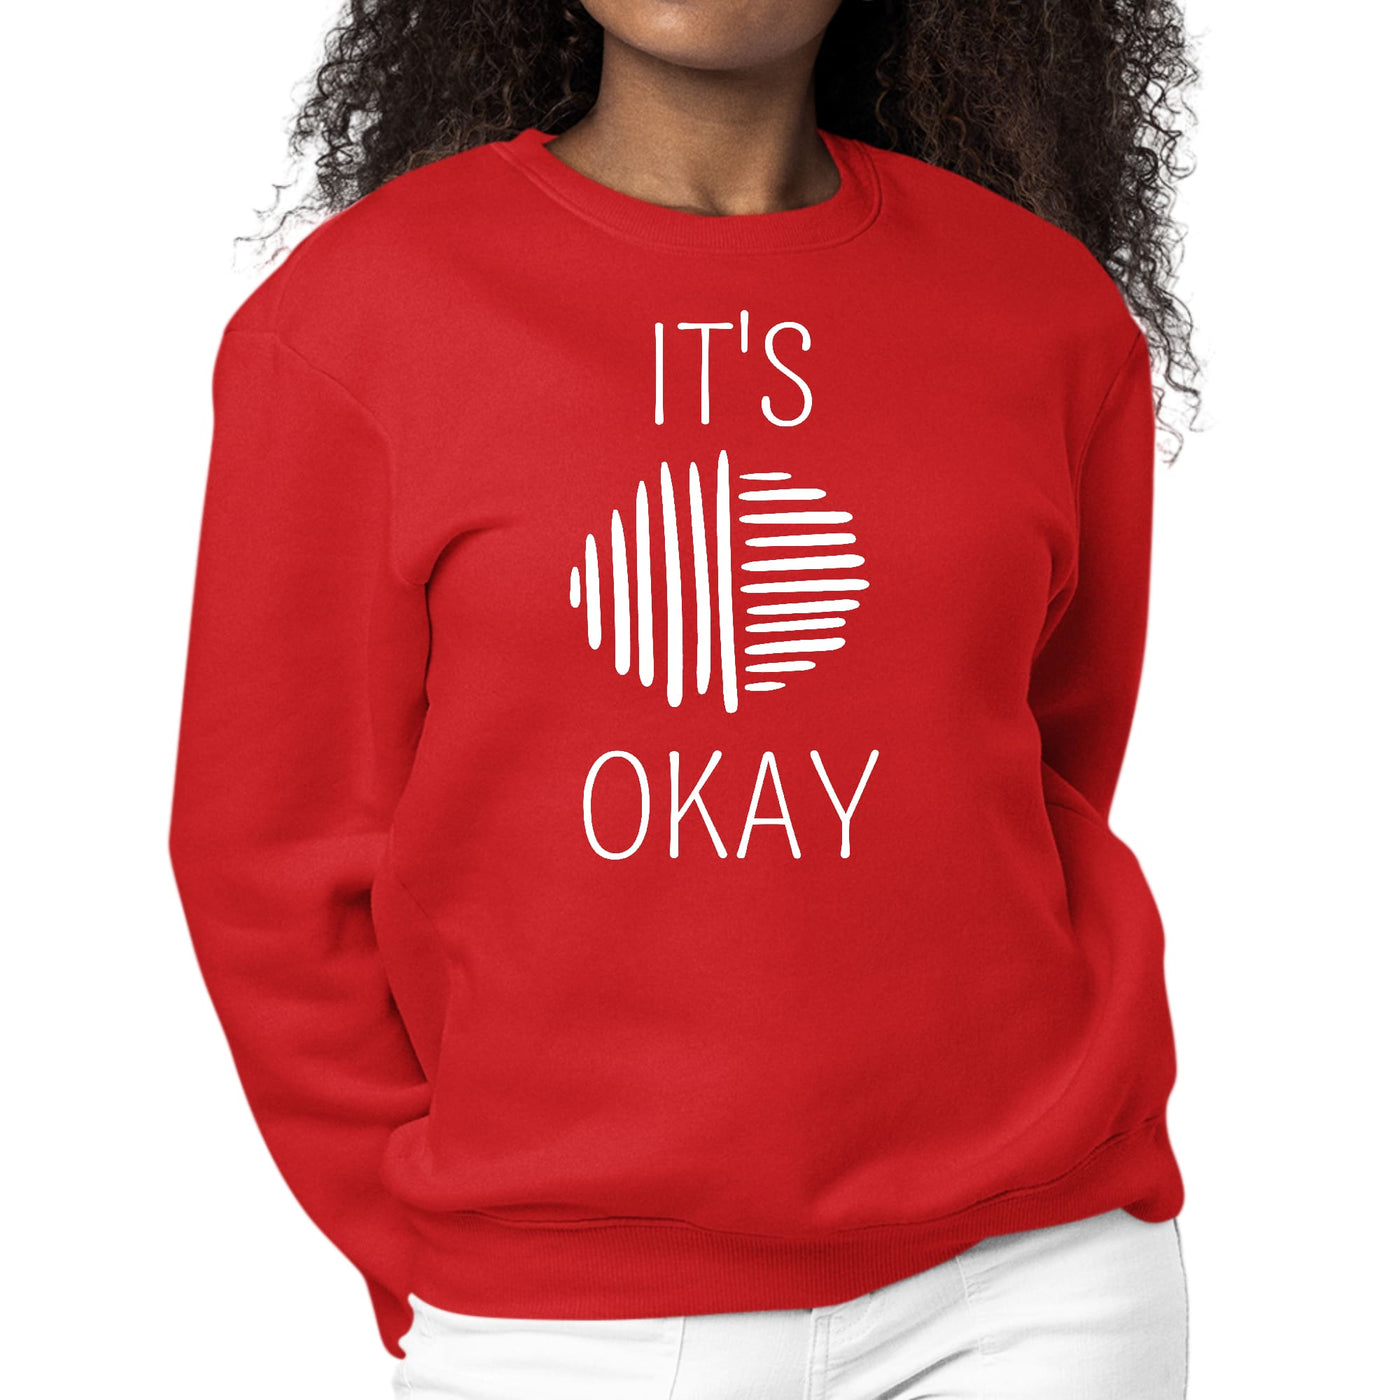 Womens Graphic Sweatshirt Say It Soul Its Okay White Line Art - Sweatshirts